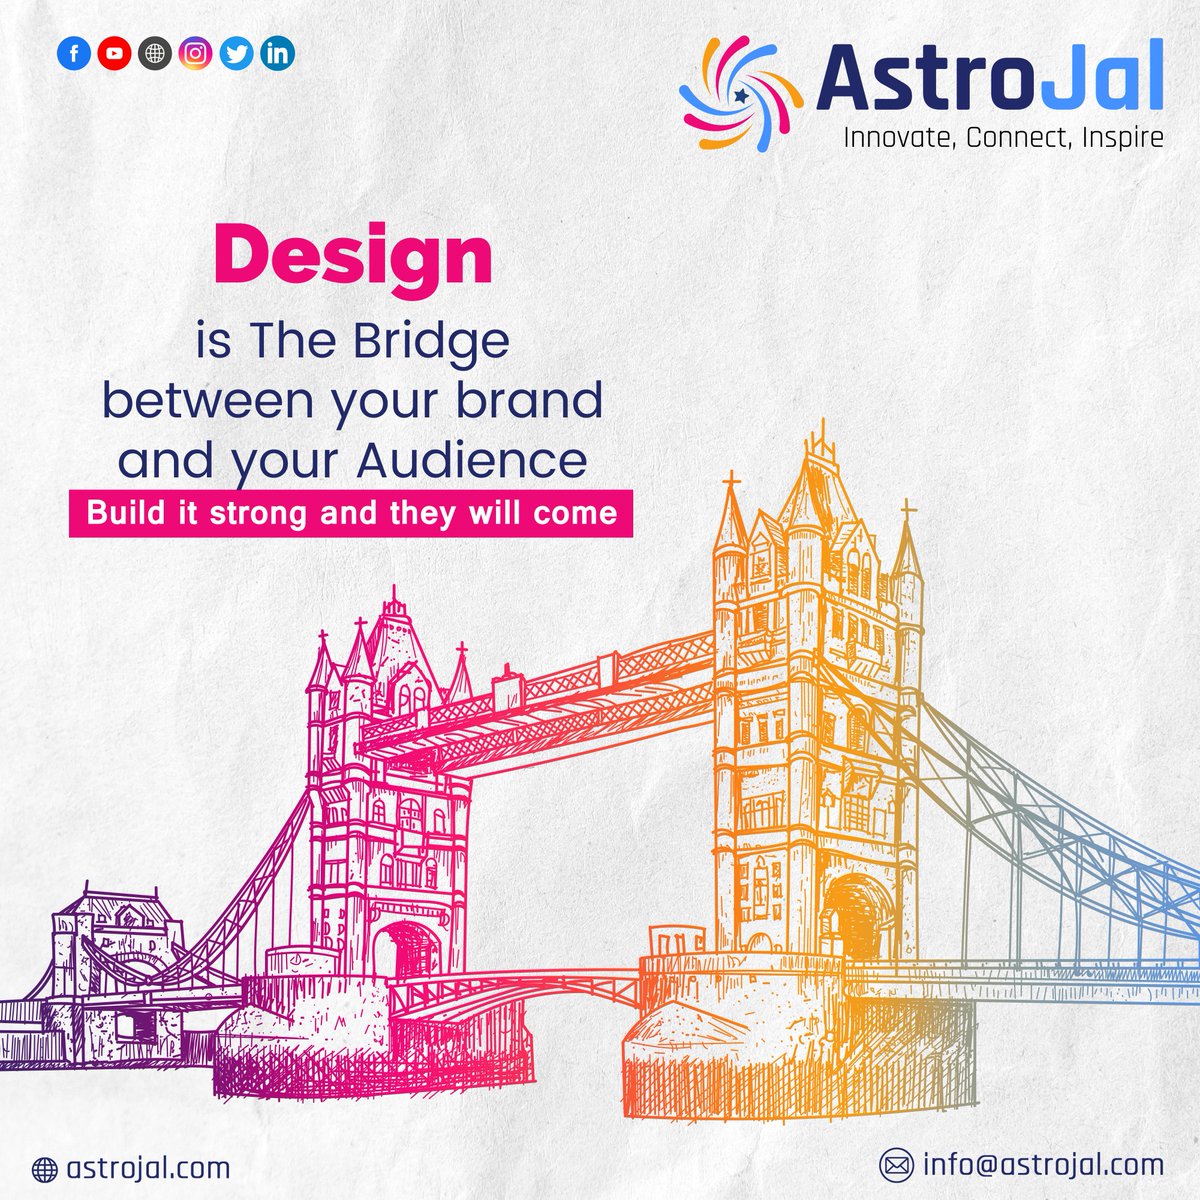 Design Is The Bridge Between Your Brand and Audience

#design #brandidentity #audienceengagement #CreativeConnections #branddesign #designinspiration #astrojal